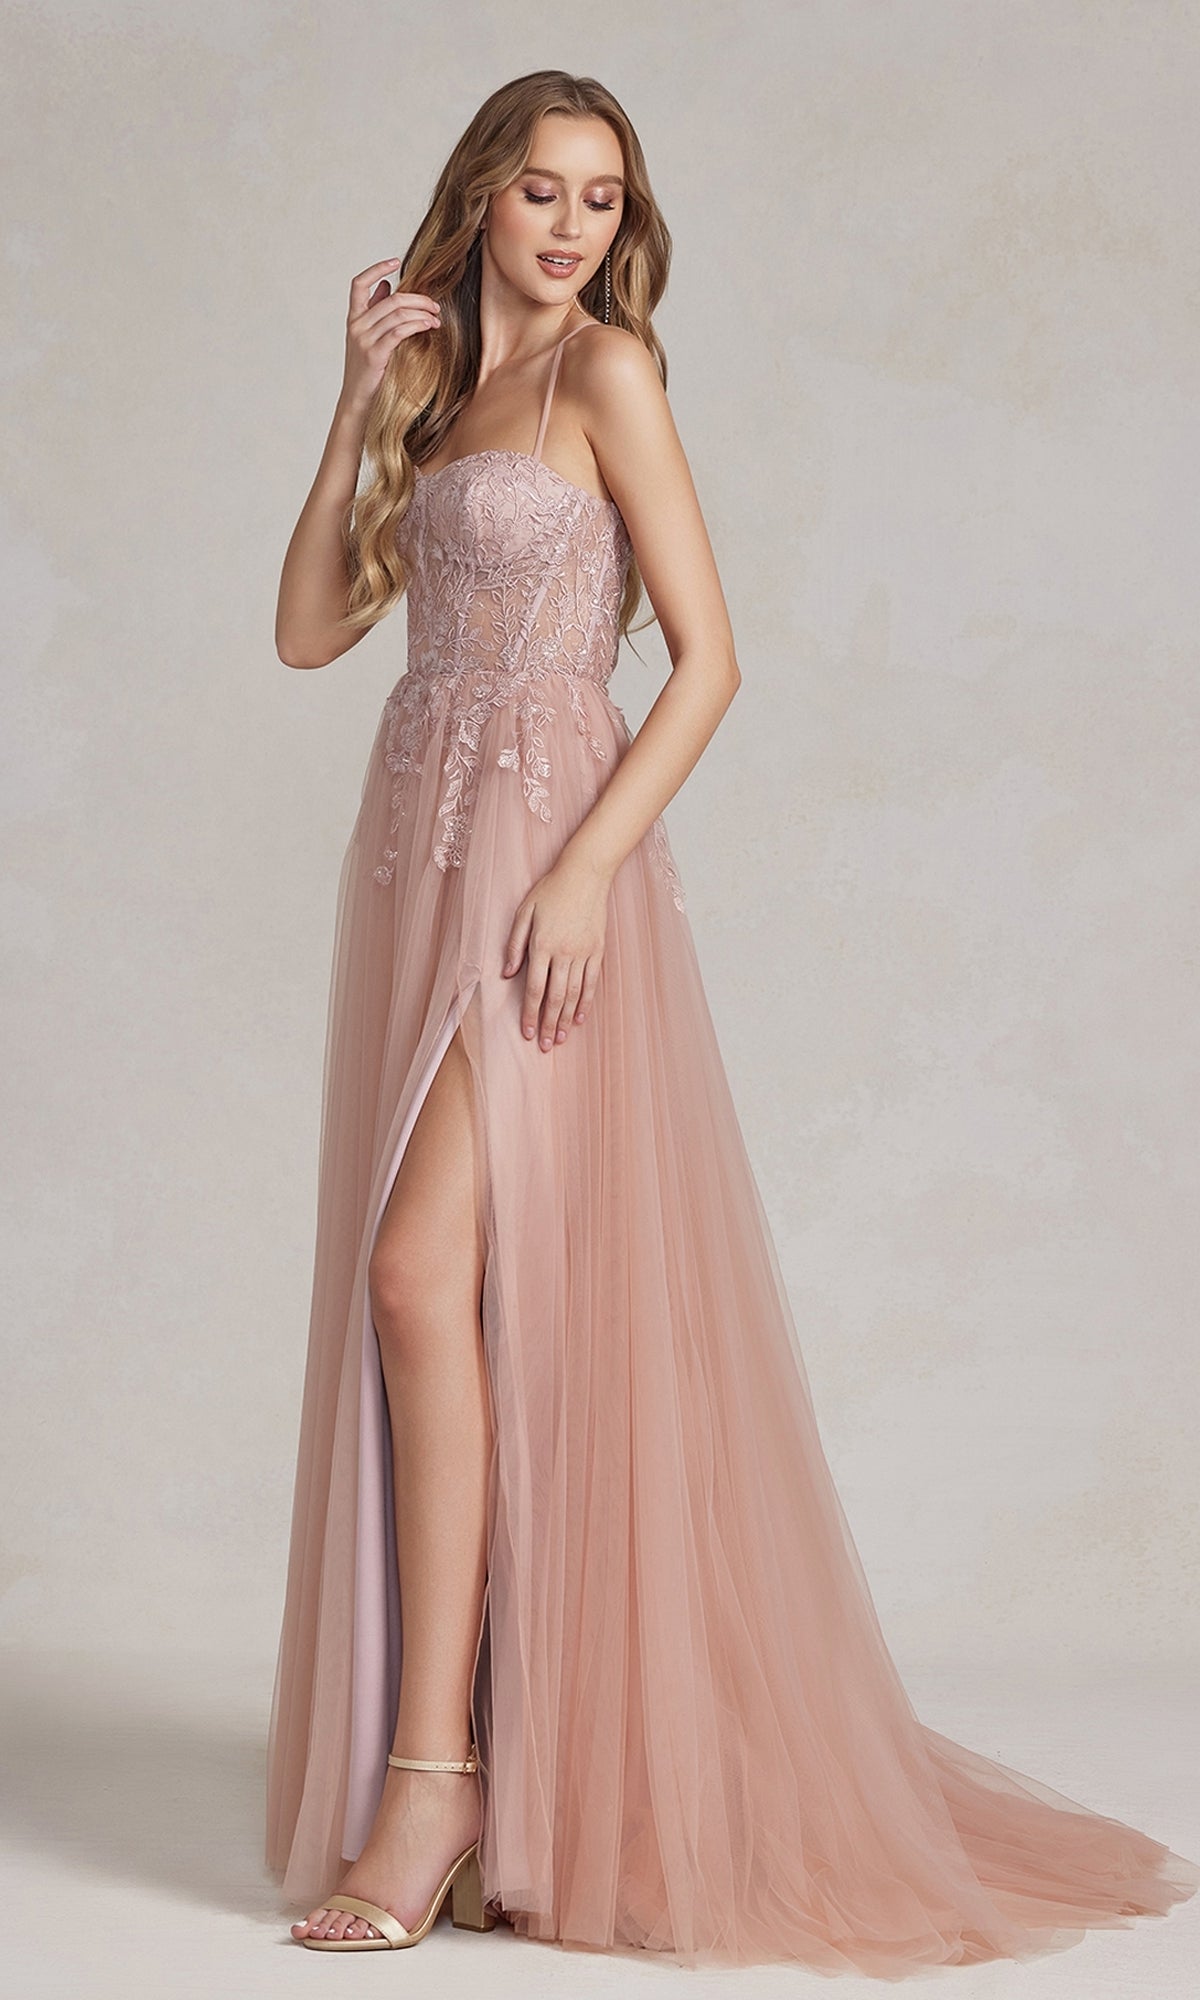 Corset-Bodice Long A-Line Prom Dress - PromGirl